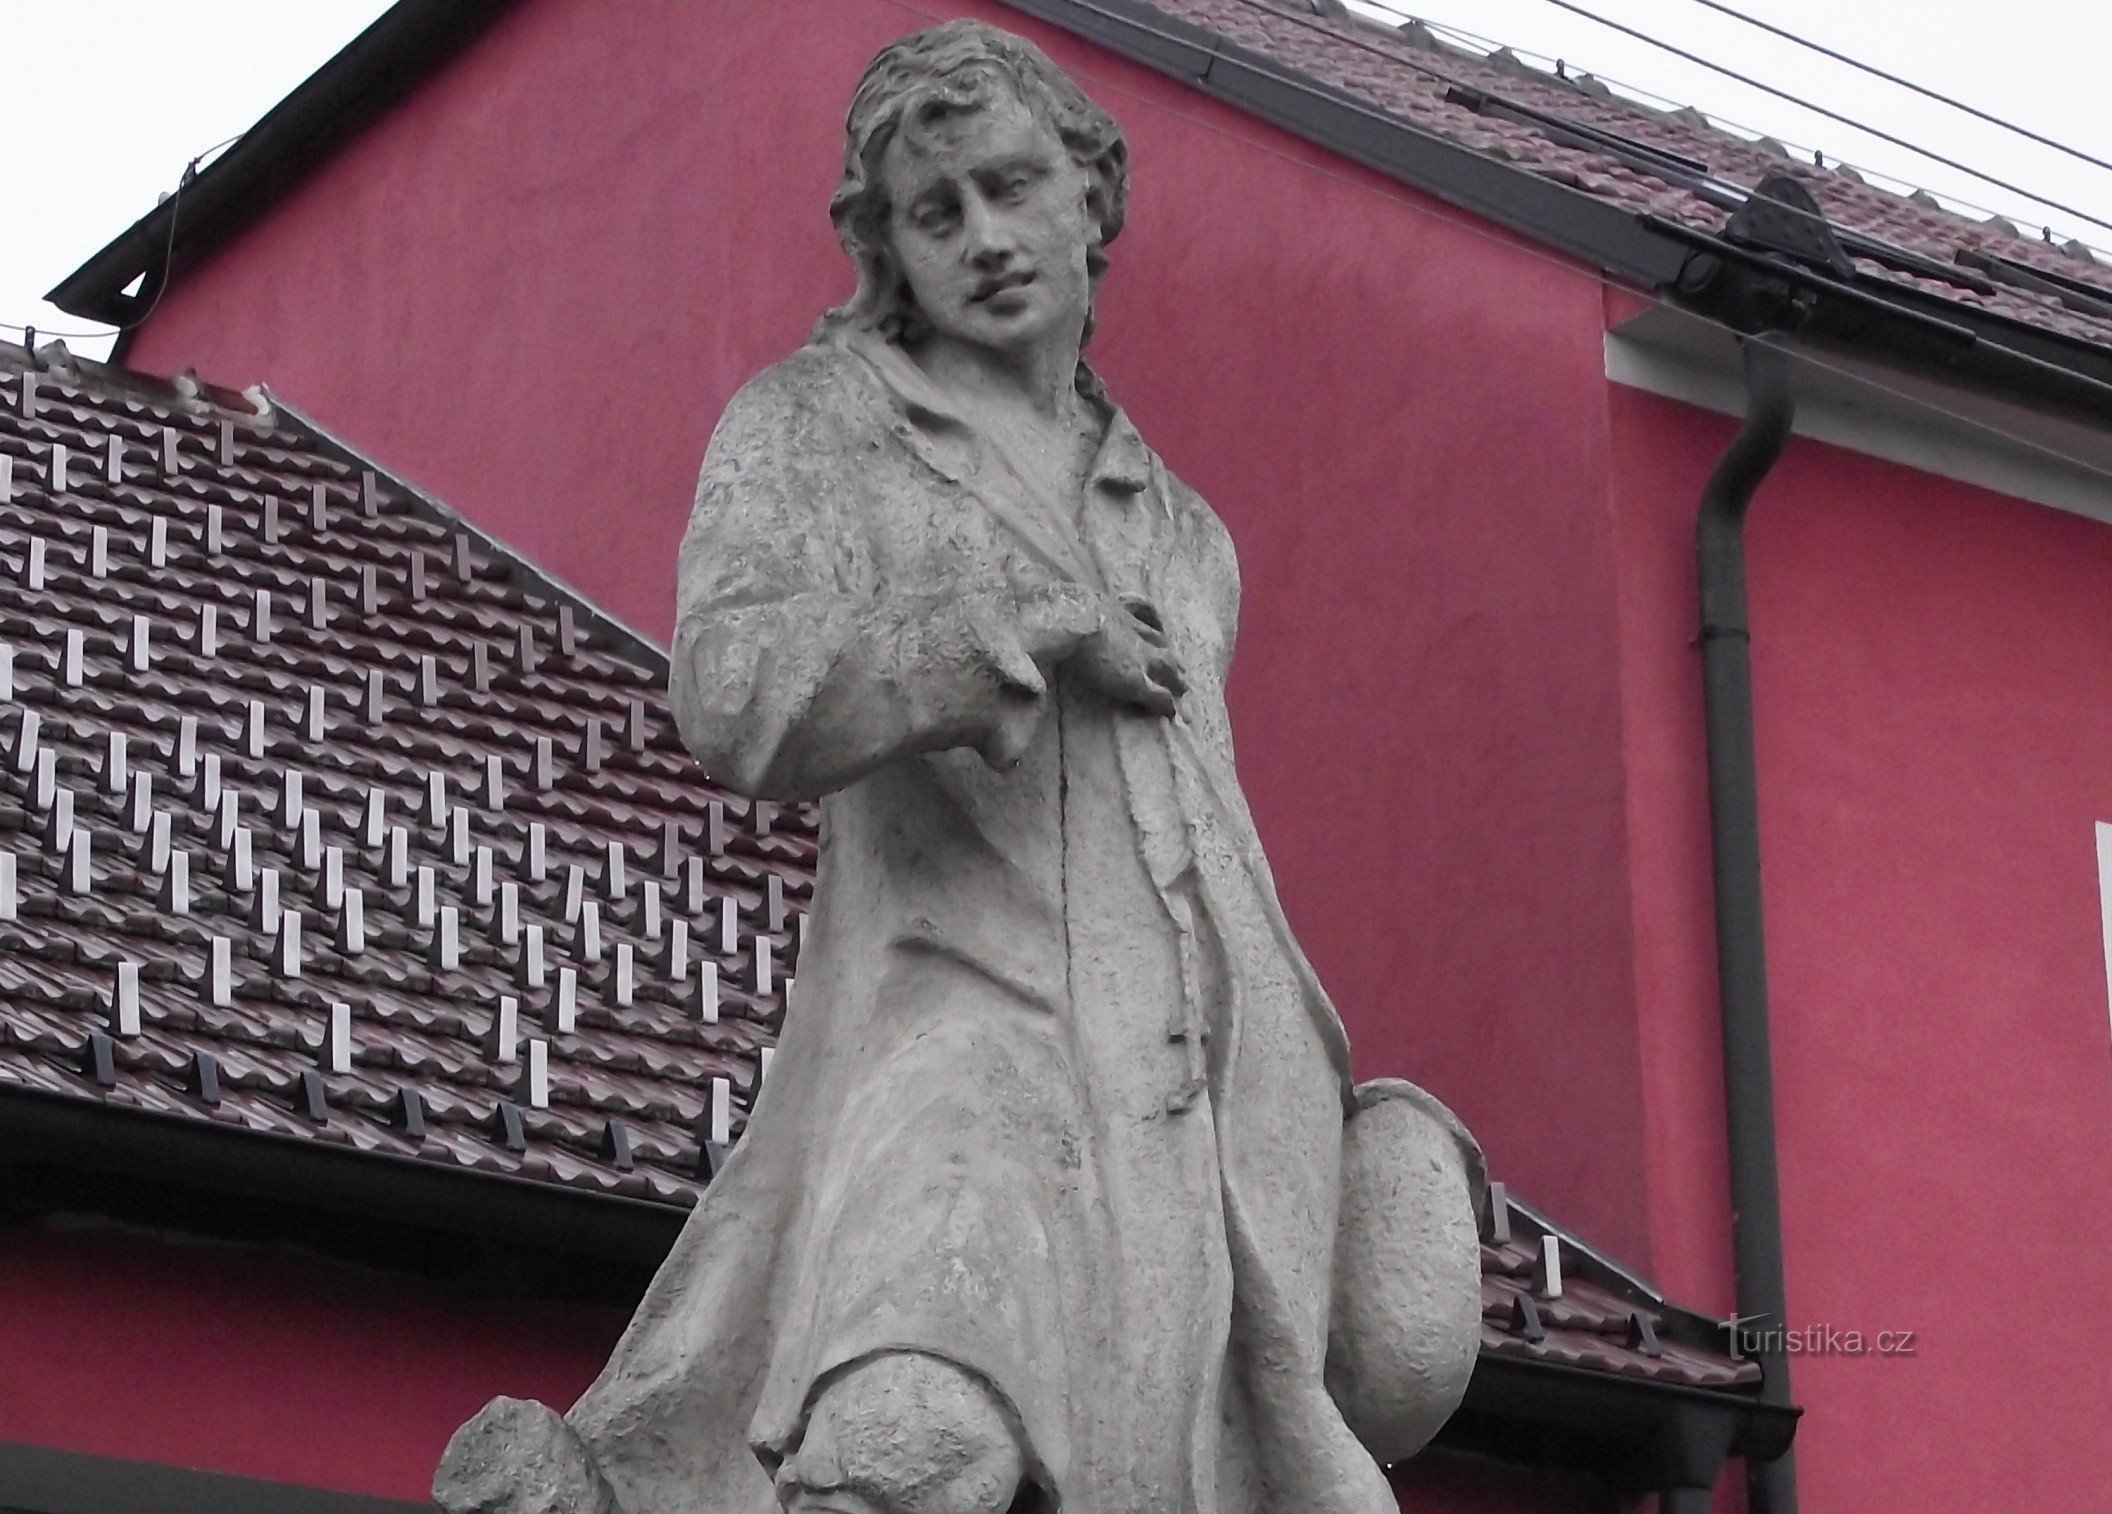 Velké Bílovice - standbeeld van St. Wendelin